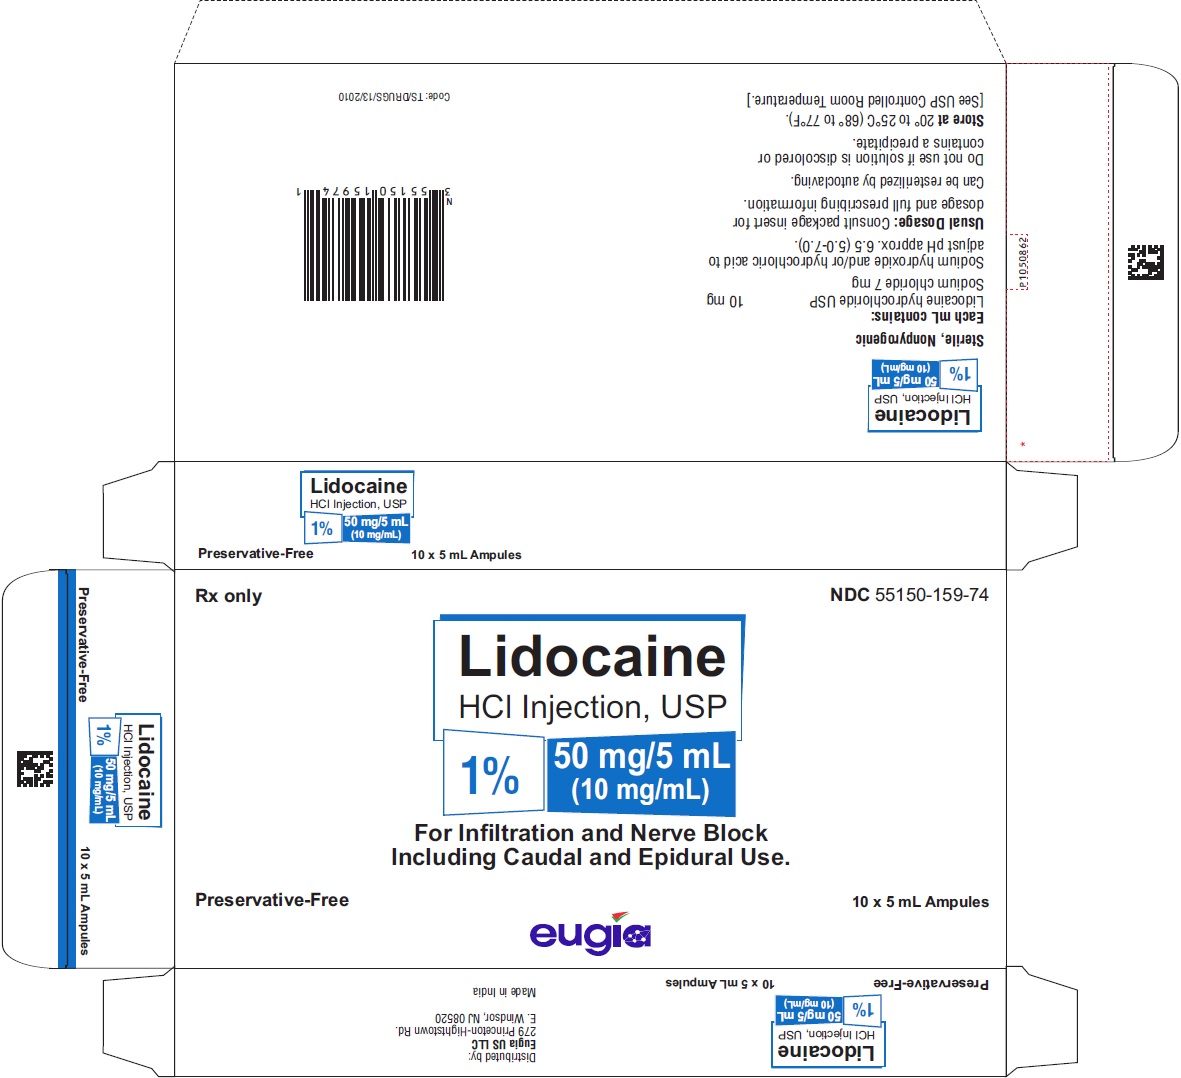 PACKAGE LABEL-PRINCIPAL DISPLAY PANEL - 1% 50 mg/5 mL (10 mg/mL) - 5 mL Container-Carton [10 Ampules]